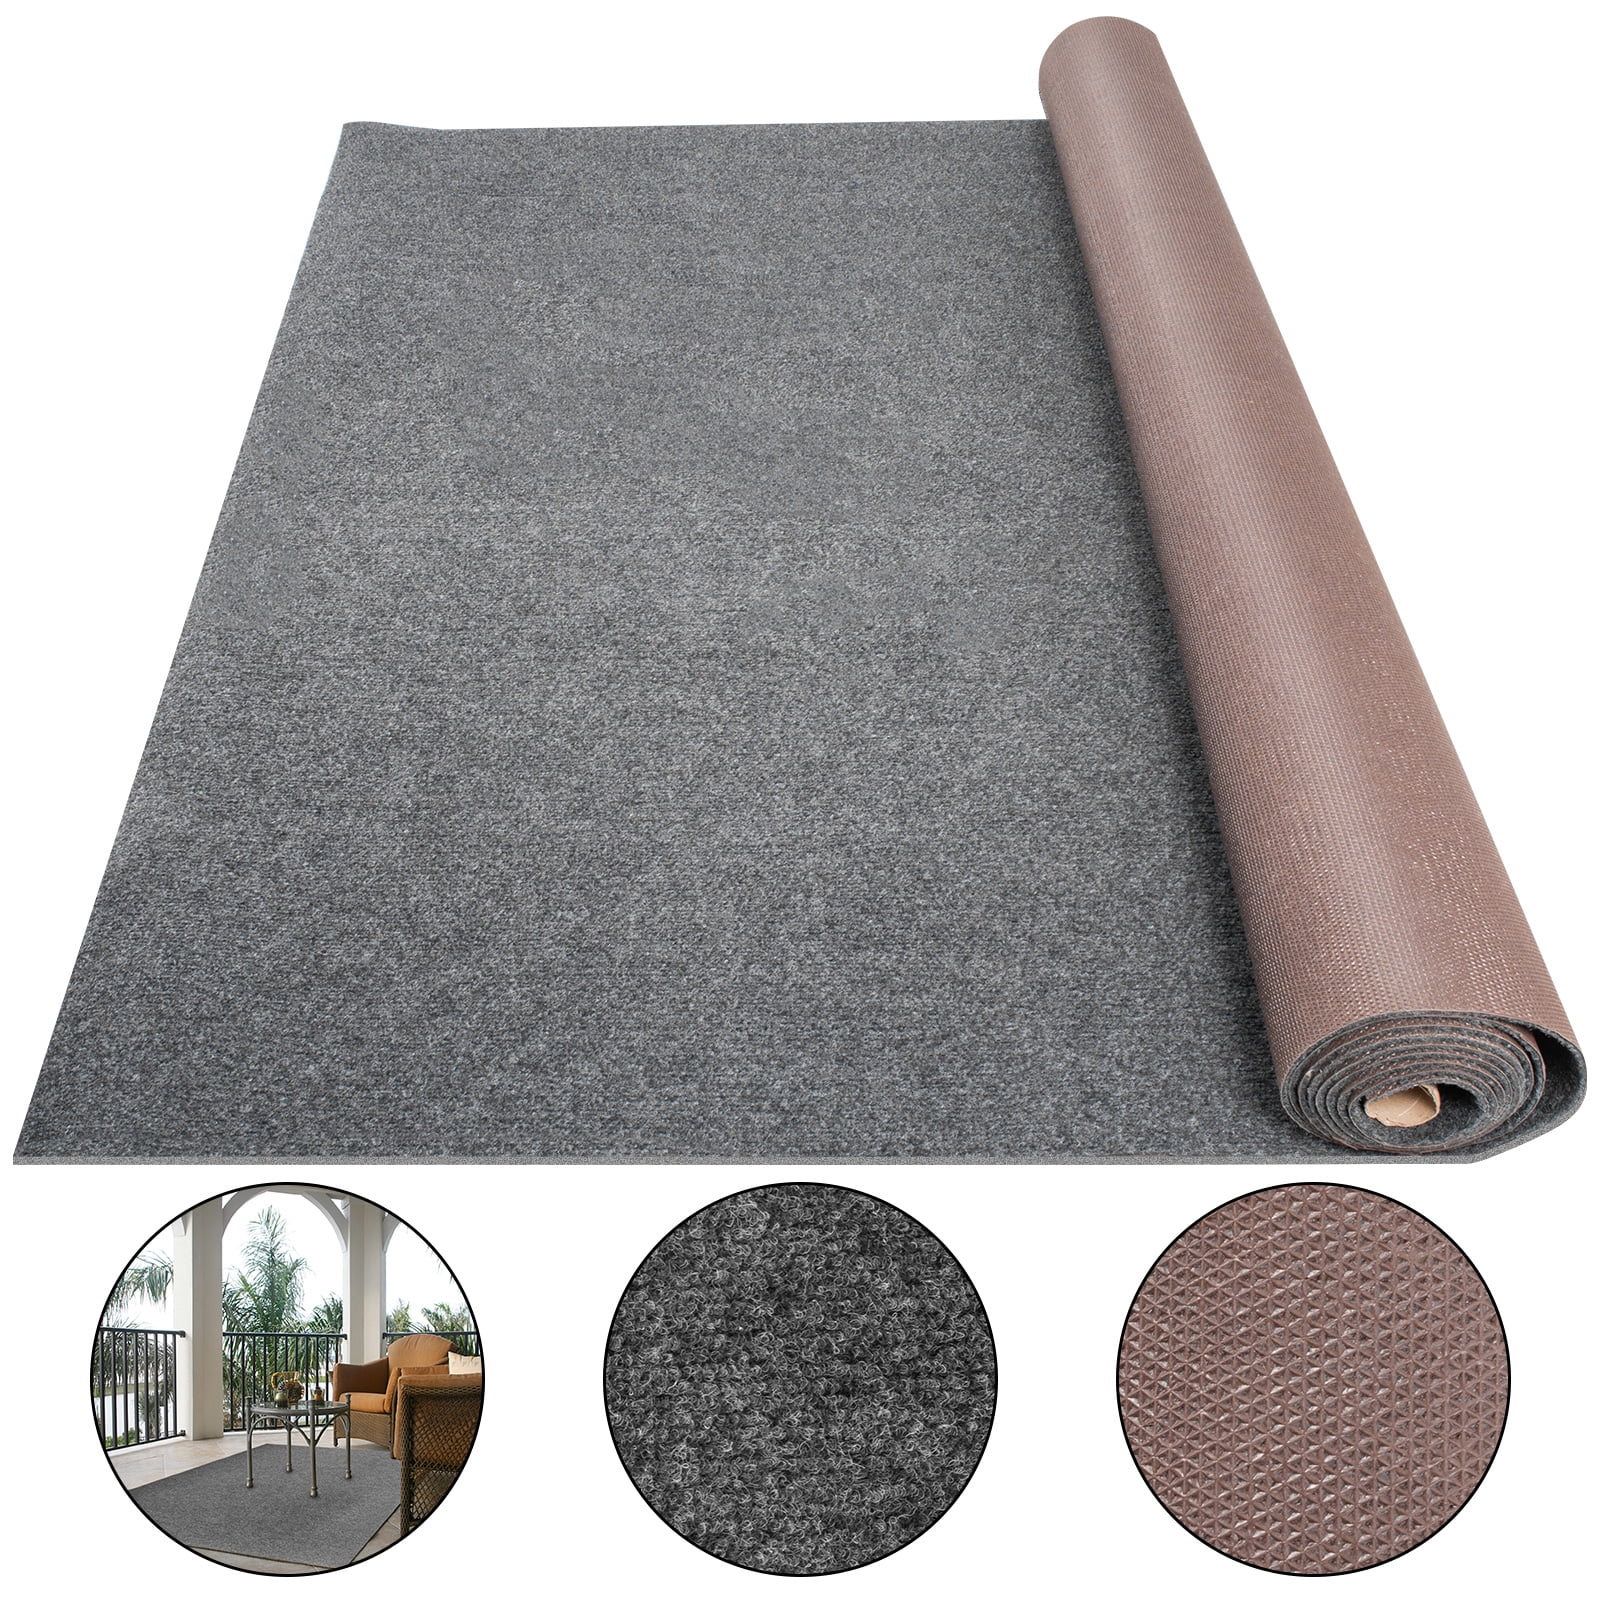 Instabind™ Outdoor Marine Style Carpet Binding 50' at Menards®